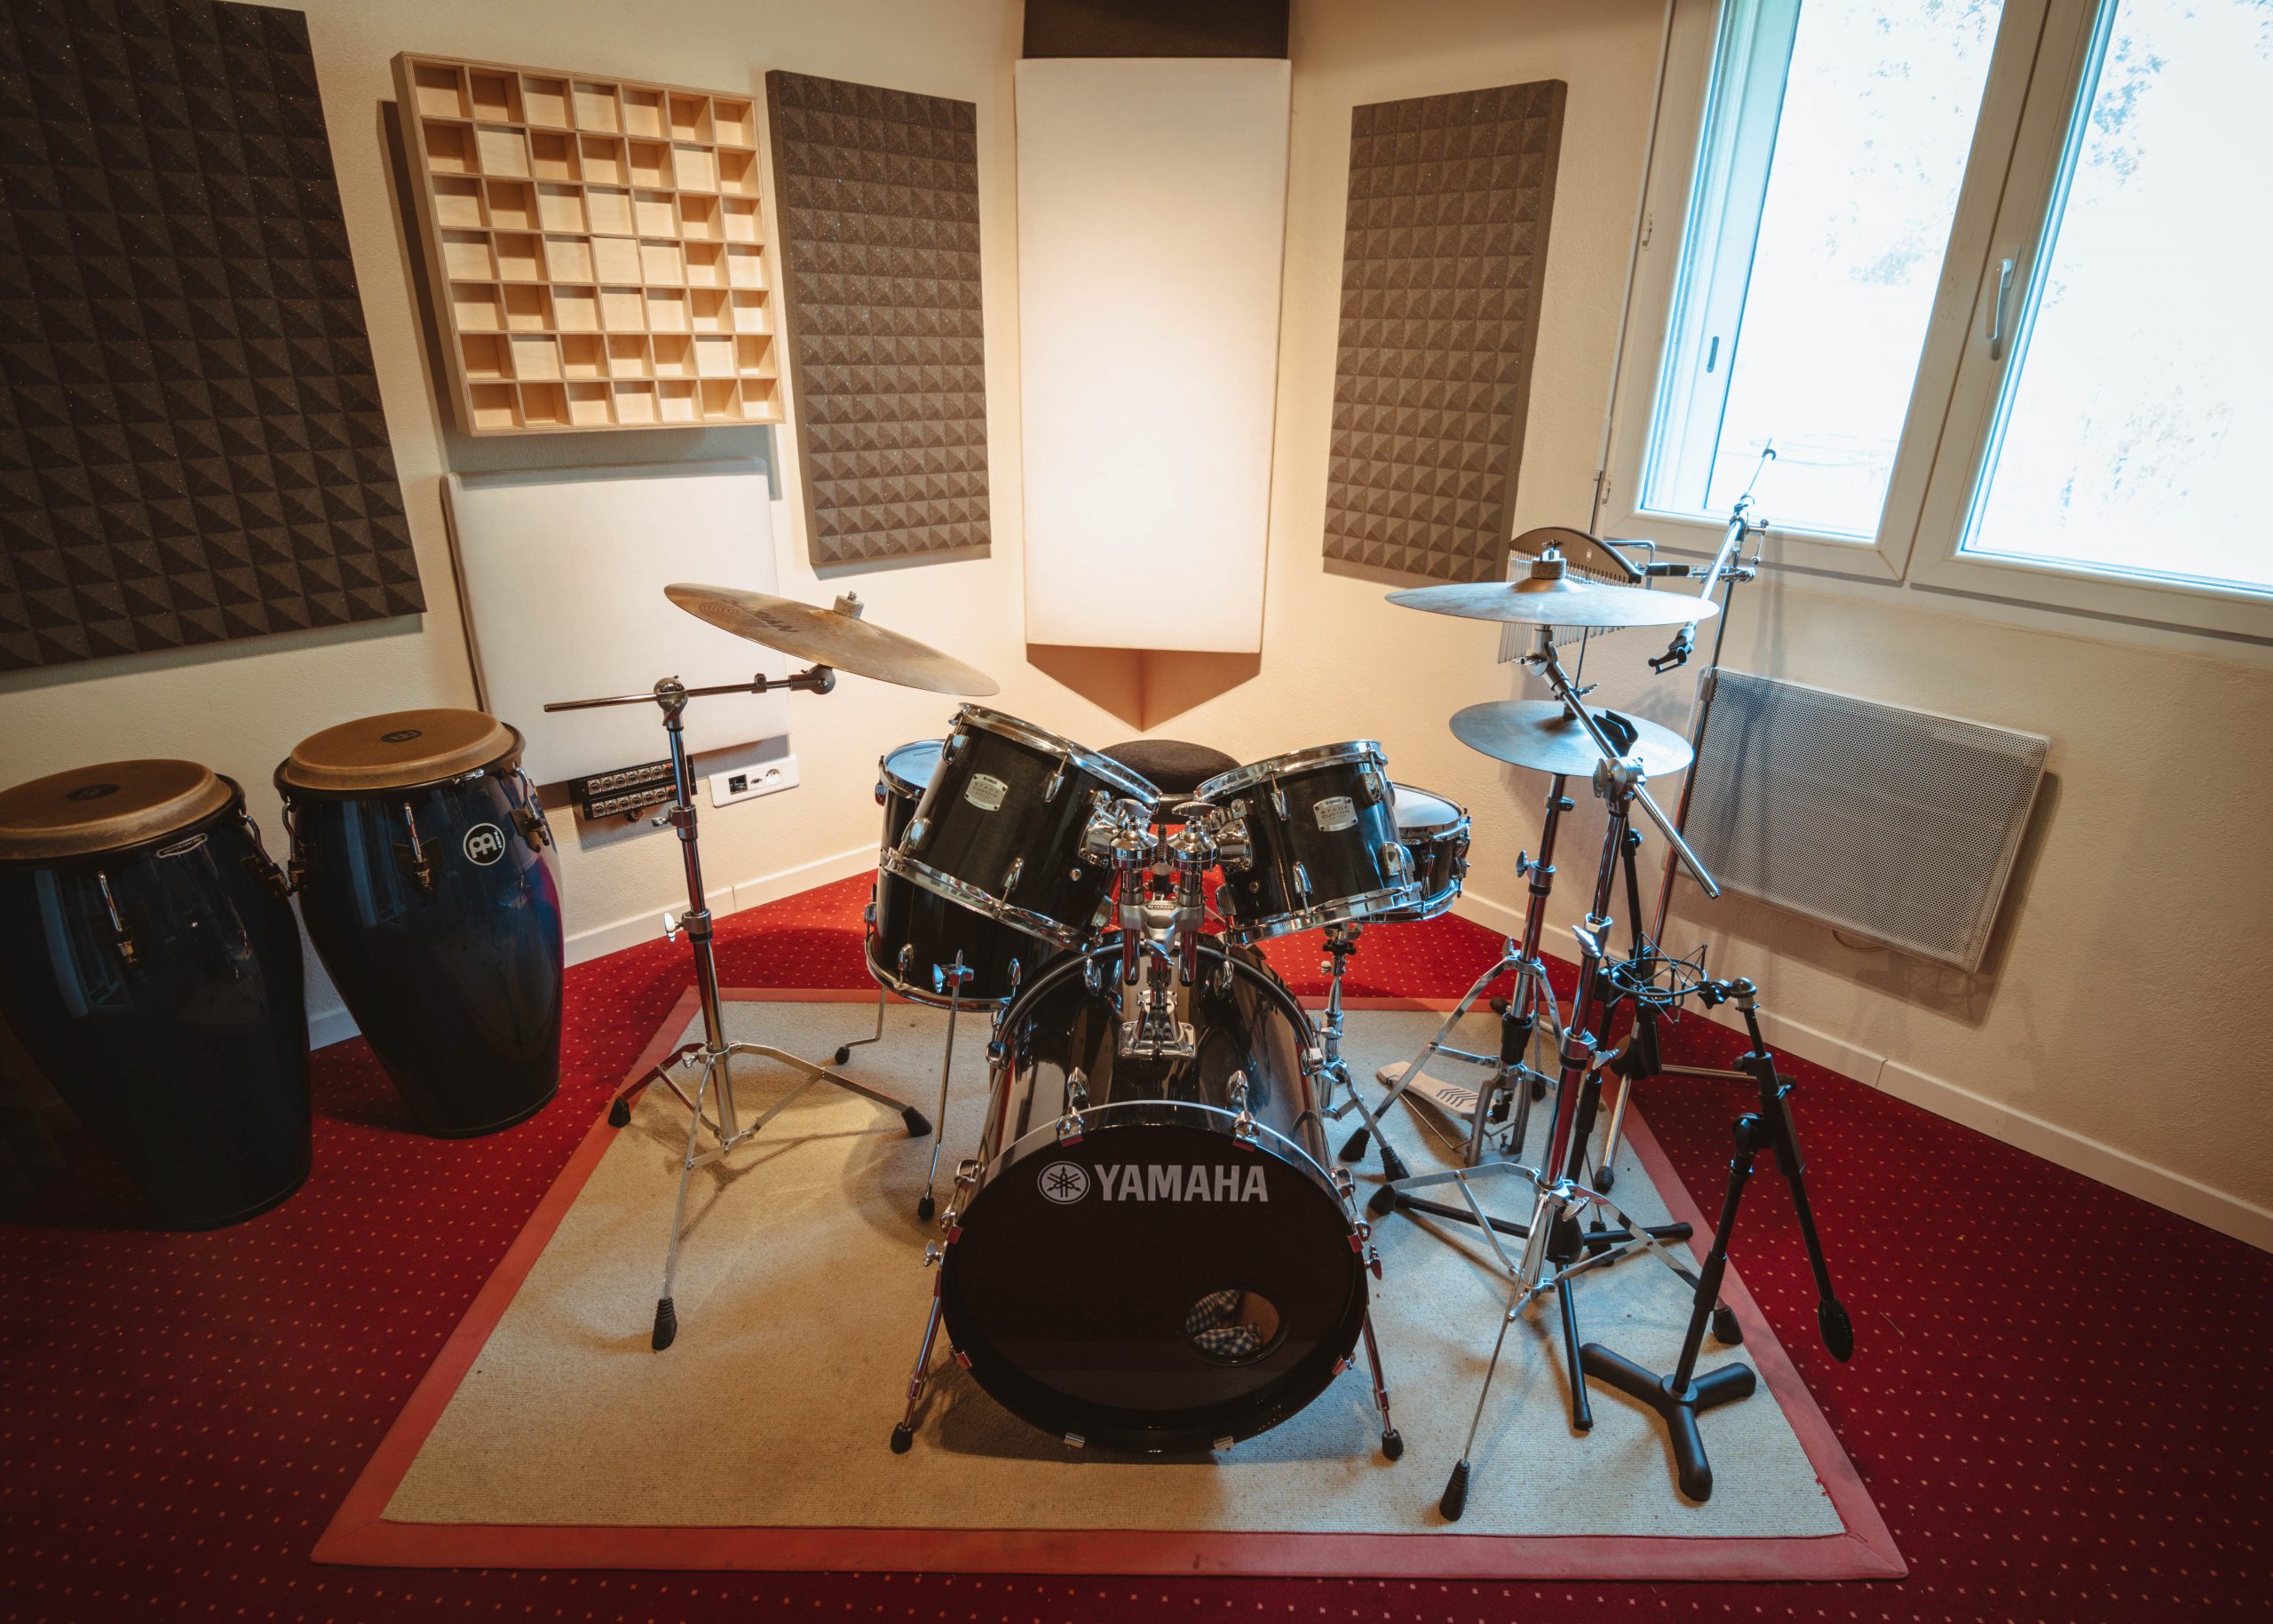 Accueil Studio NovaSon - Studio d'enregistrement près de NIMES